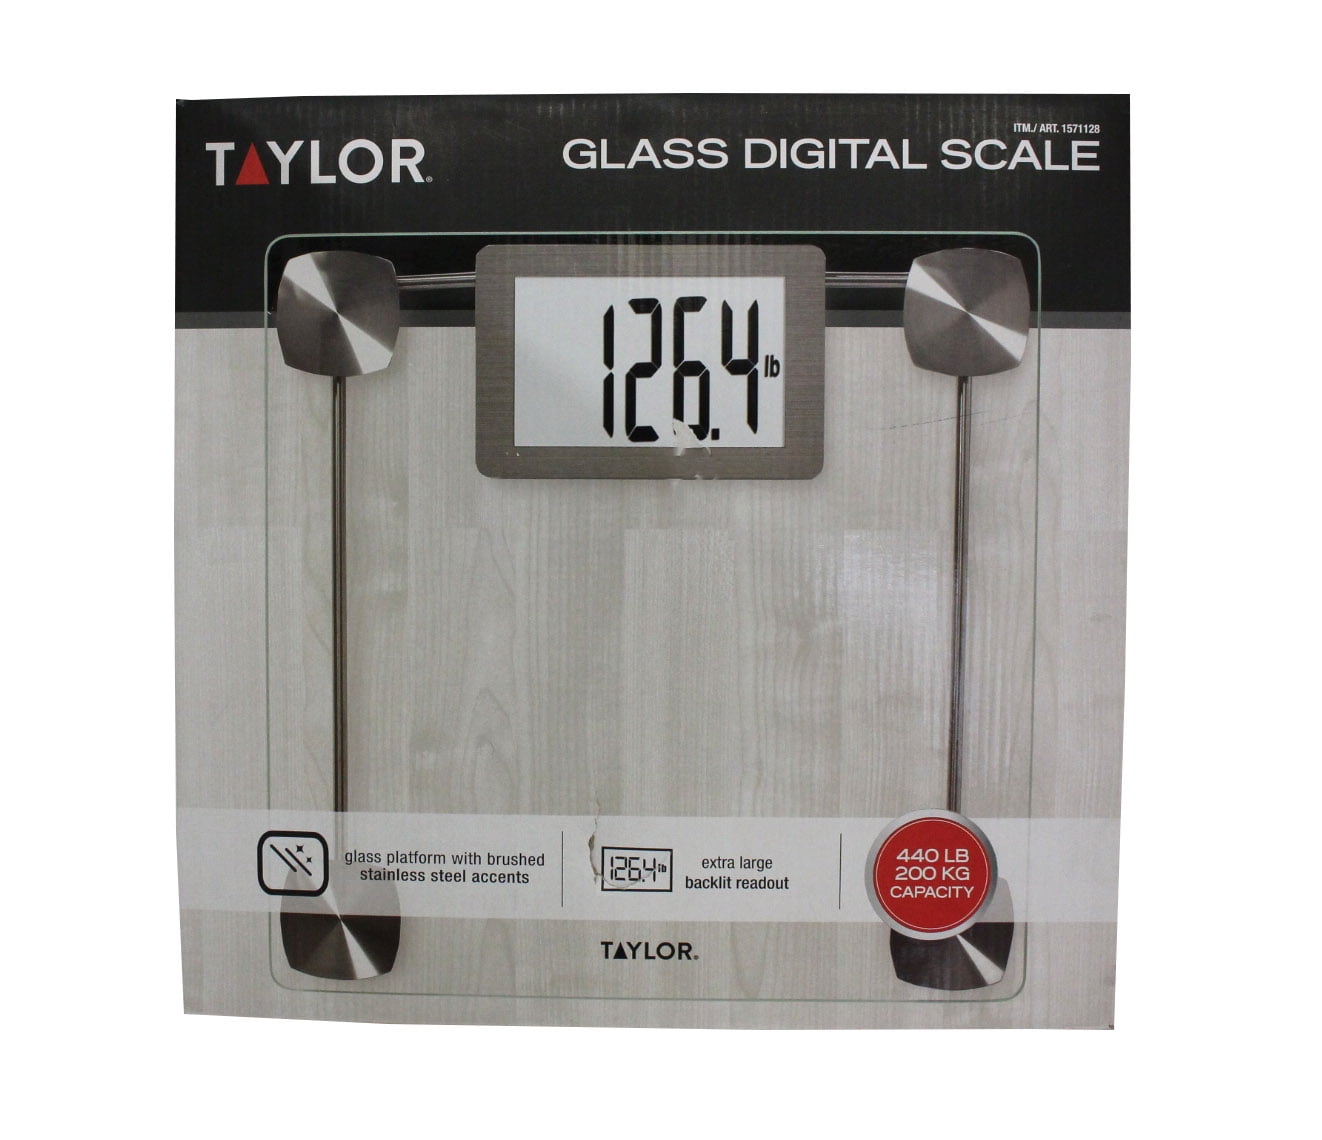 Taylor Digital Glass Bathroom Scale with Backlit Display 440lb 200kg  capacity!